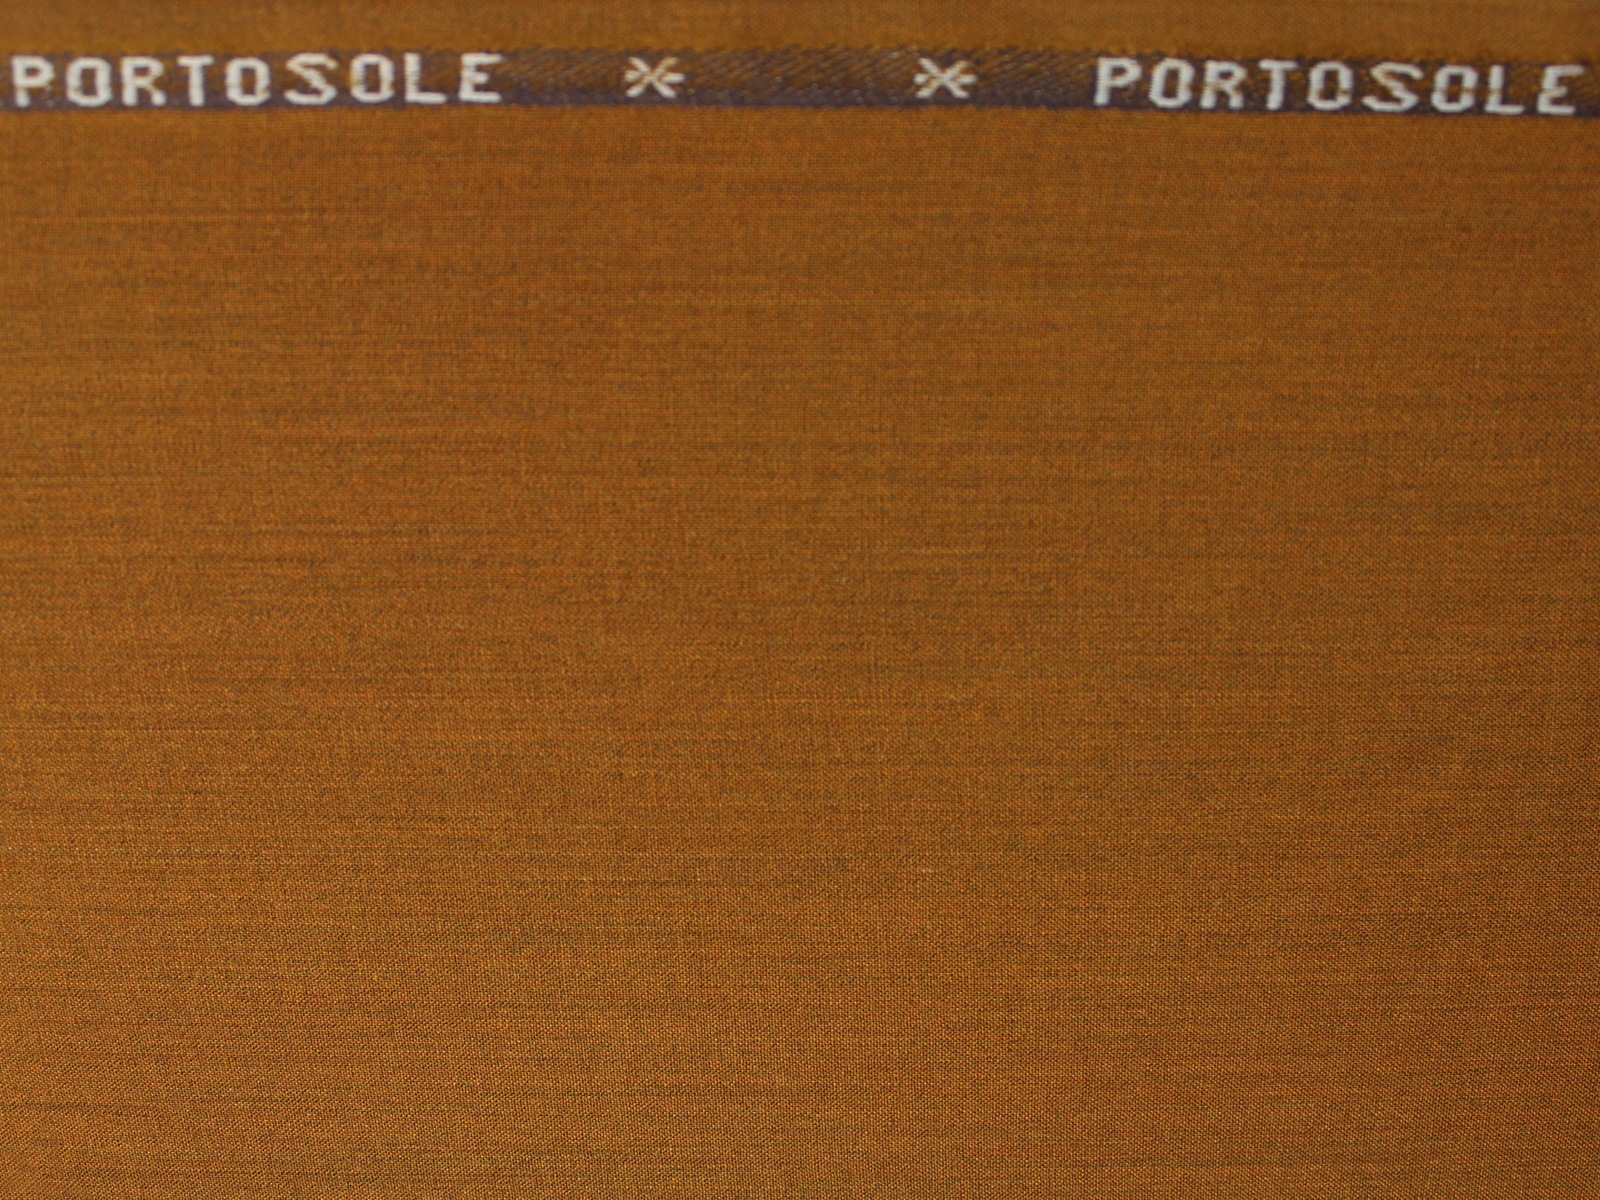 00486 Portosole caldo marrone